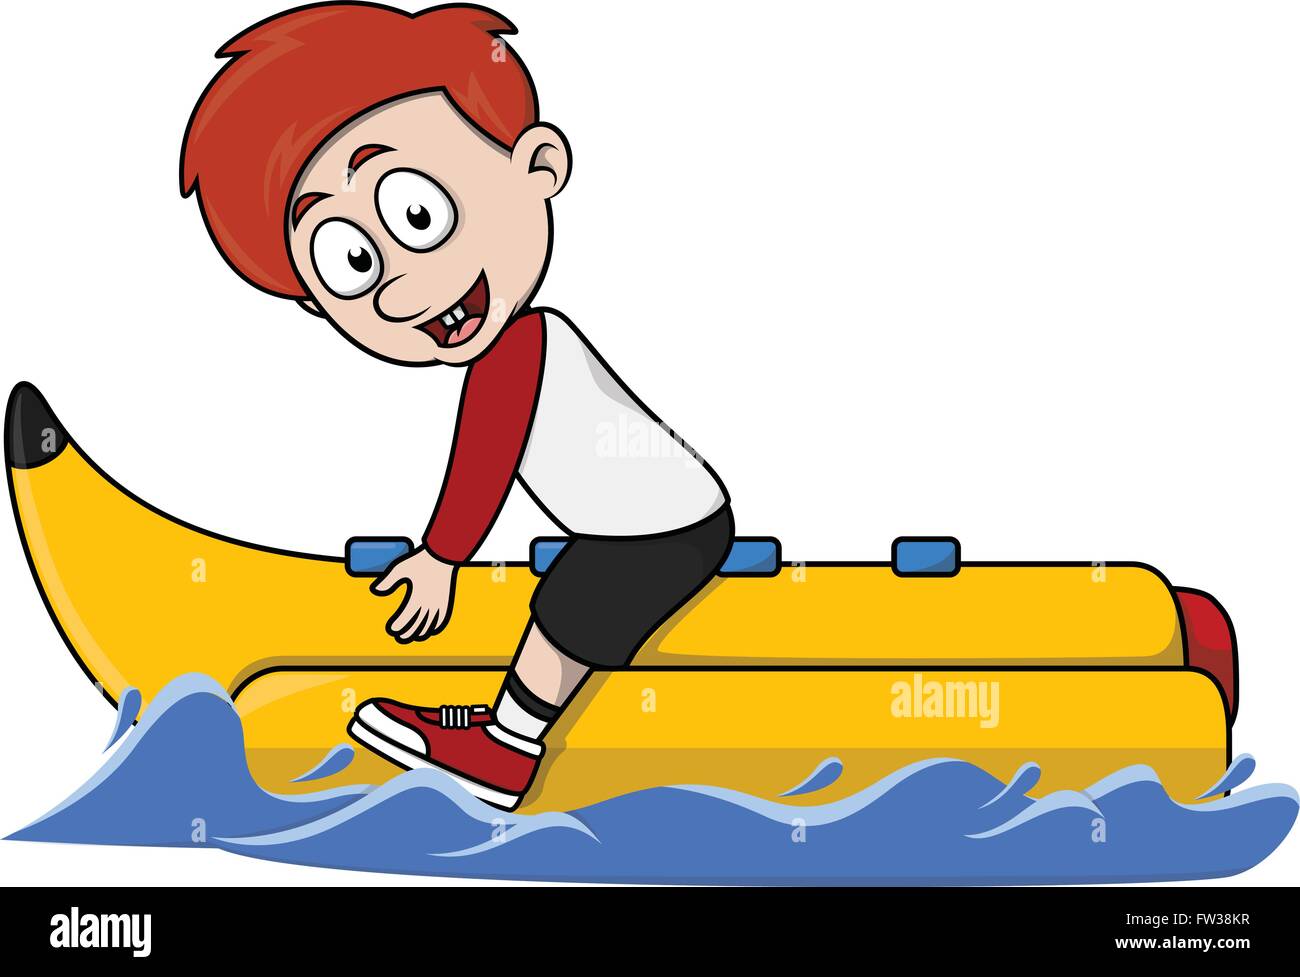 Boy playing banana boat cartoon illustration Stock Vector